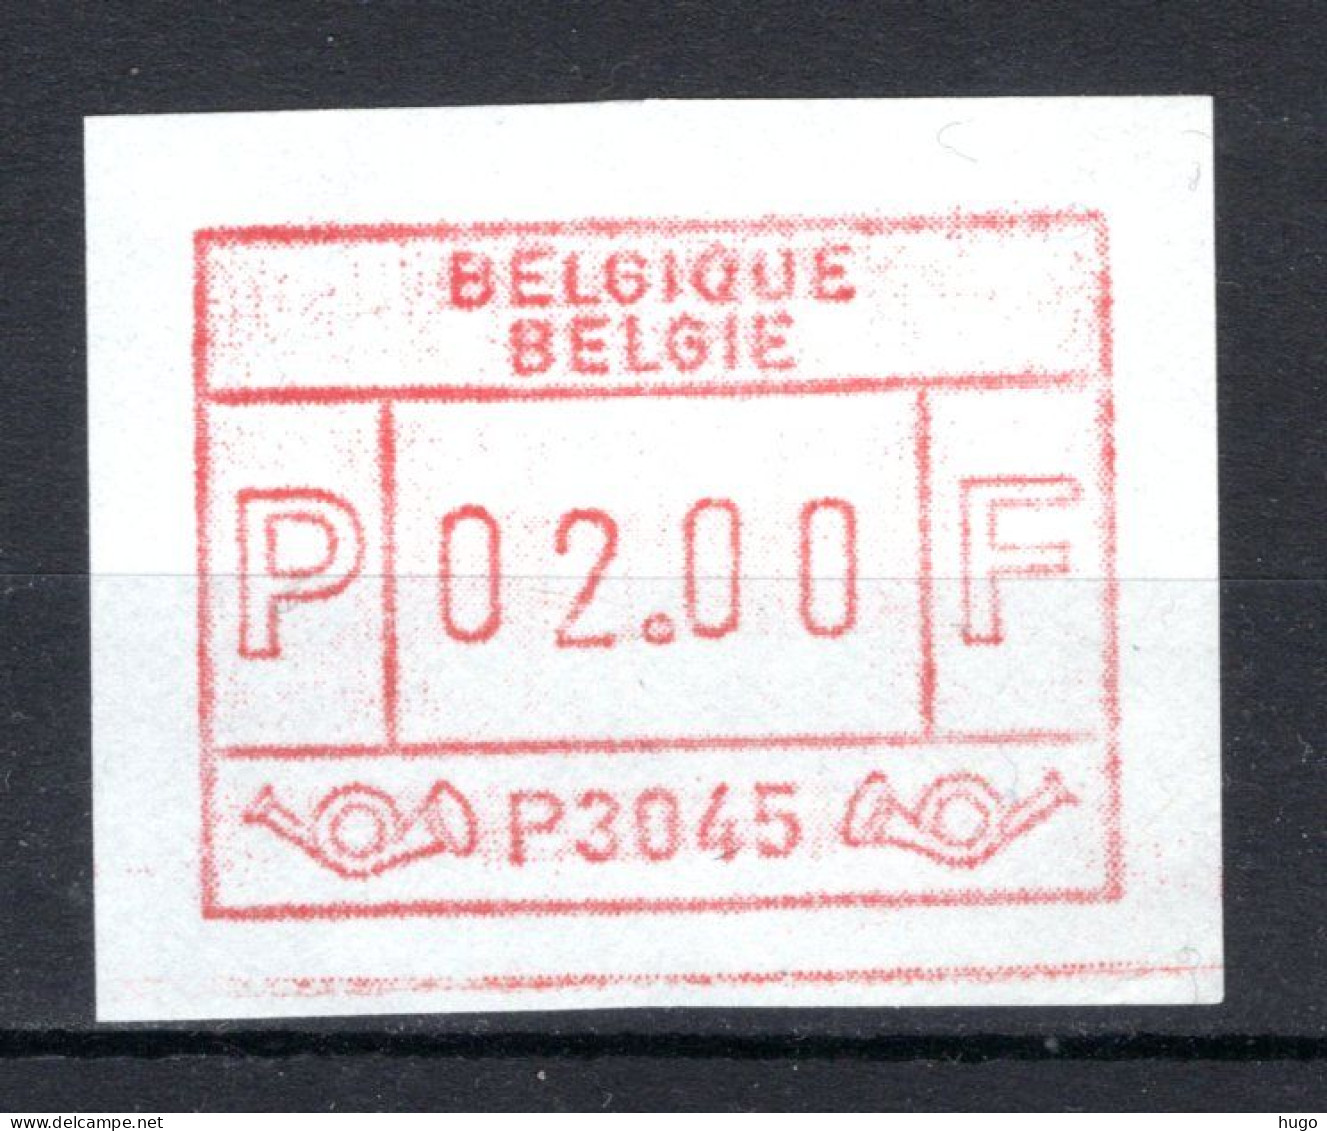 ATM 45 MNH** 1983 Type I - Liège 2 - Mint